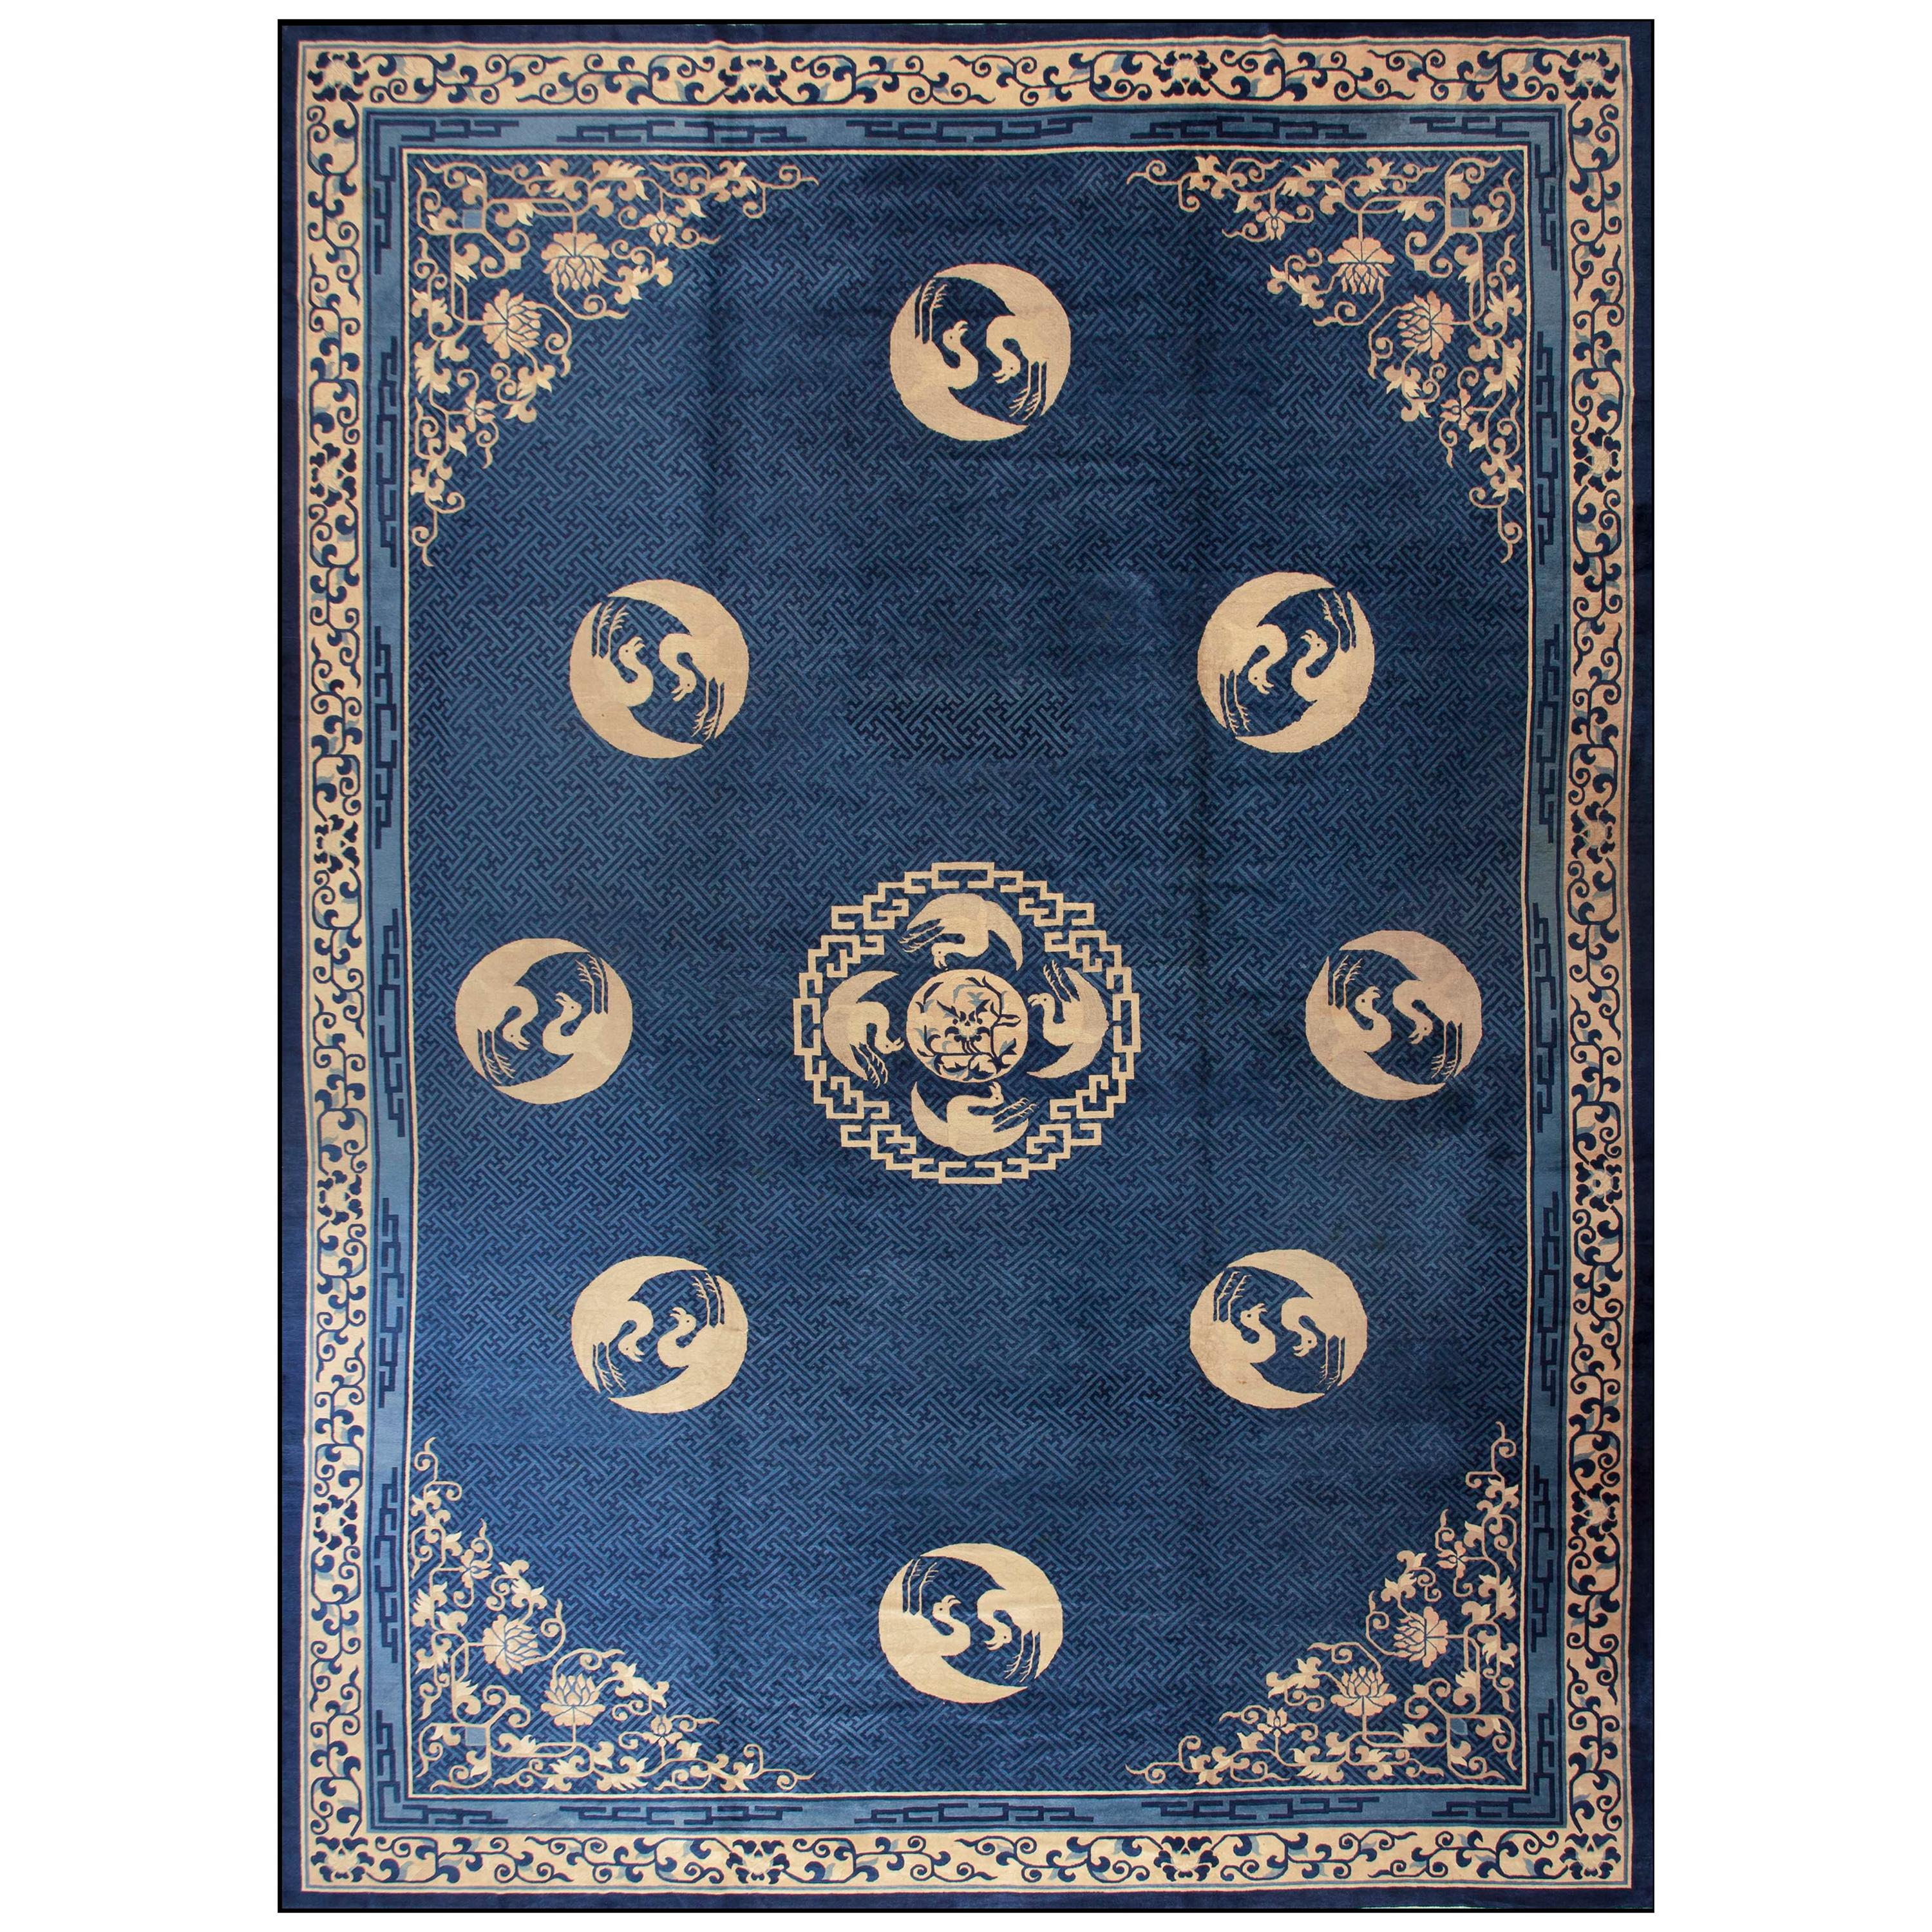 19th Century Chinese Peking Carpet ( 14' x 19'3" - 427 x 587 cm )